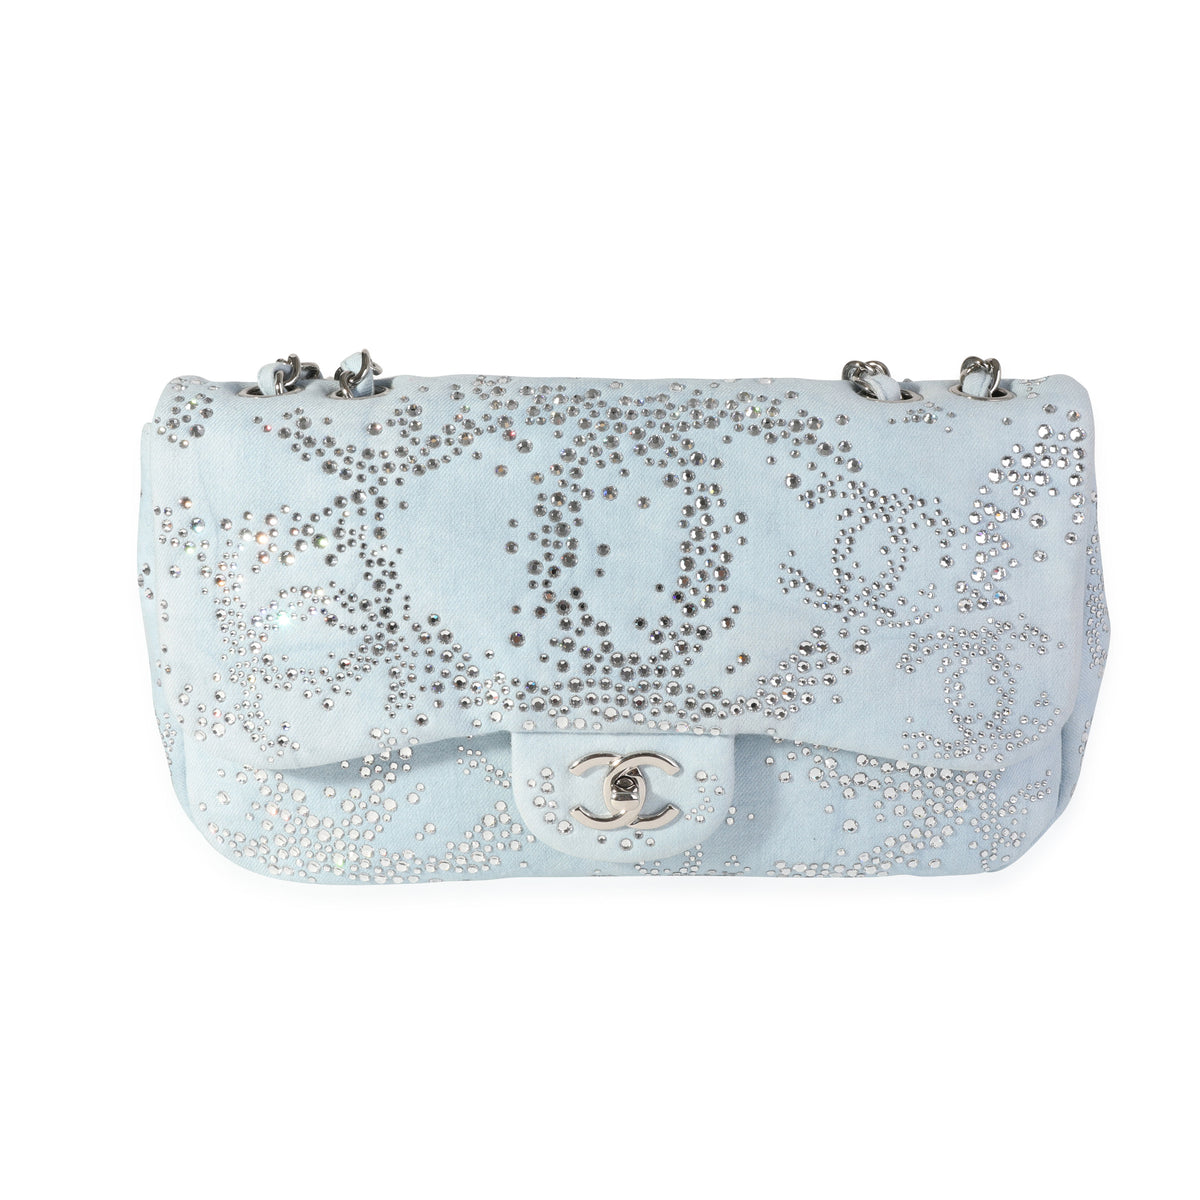 CHANEL, Bags, Sold Swarovski Crystal Chanel Bag